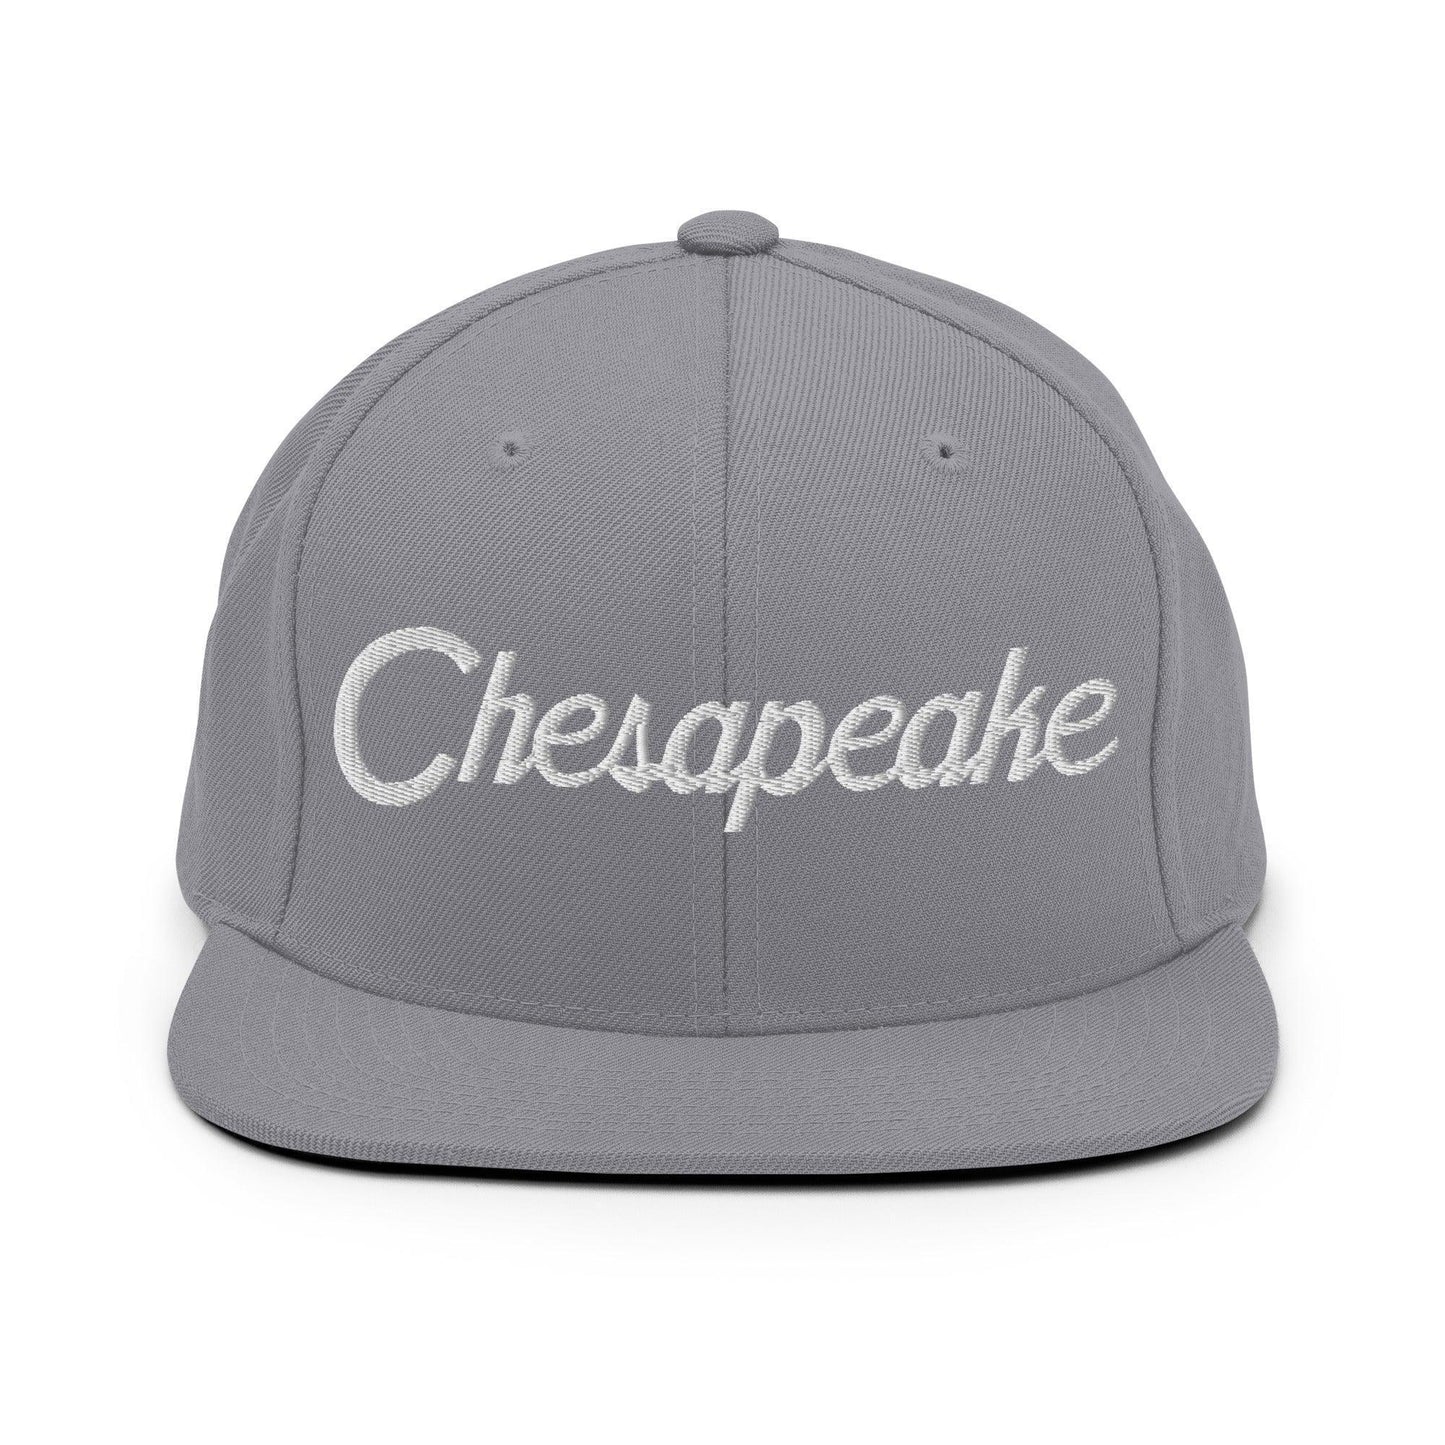 Chesapeake Script Snapback Hat Silver